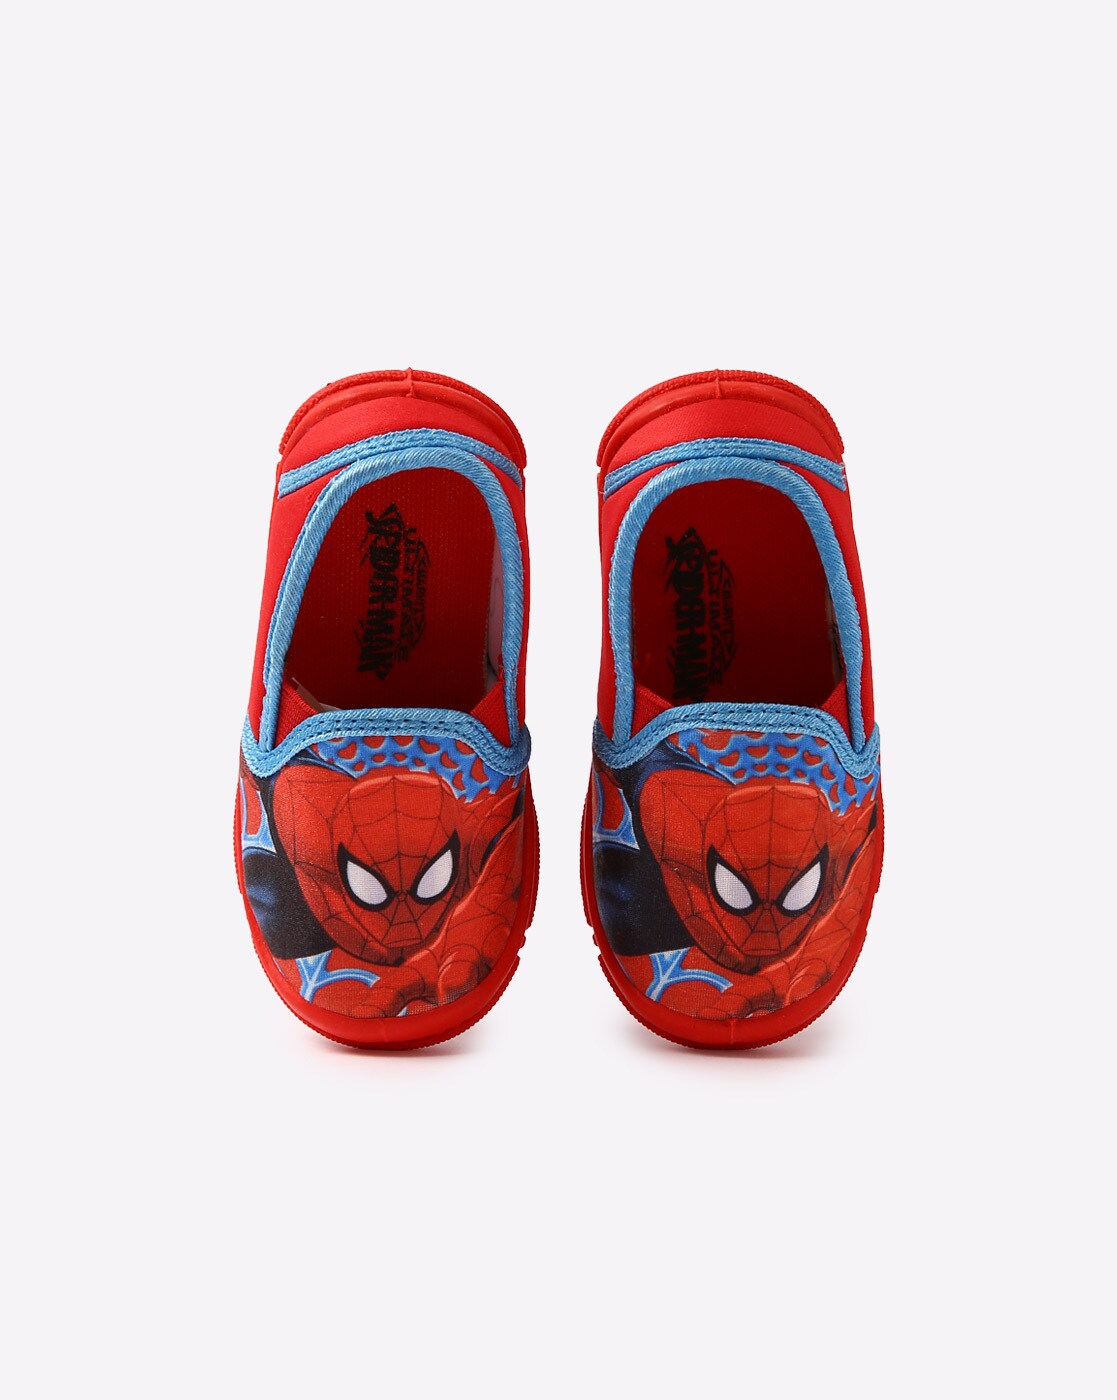 MARVEL Spider-Man Soft Soles in Red - Robeez (US)